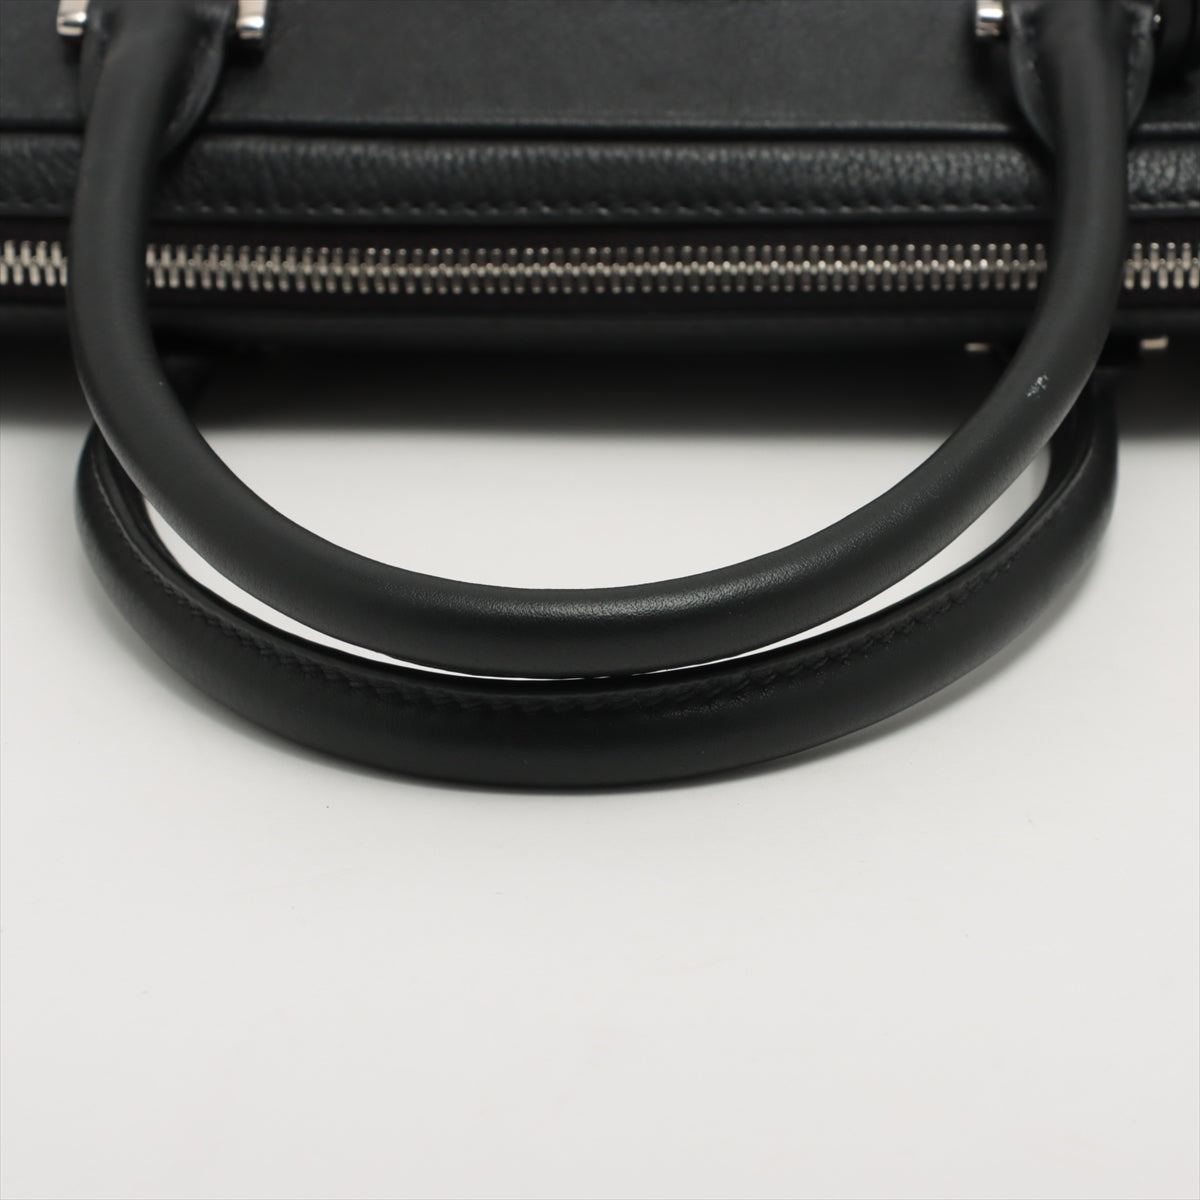 Prada Leather 2WAY Businessbag Black 2VE368